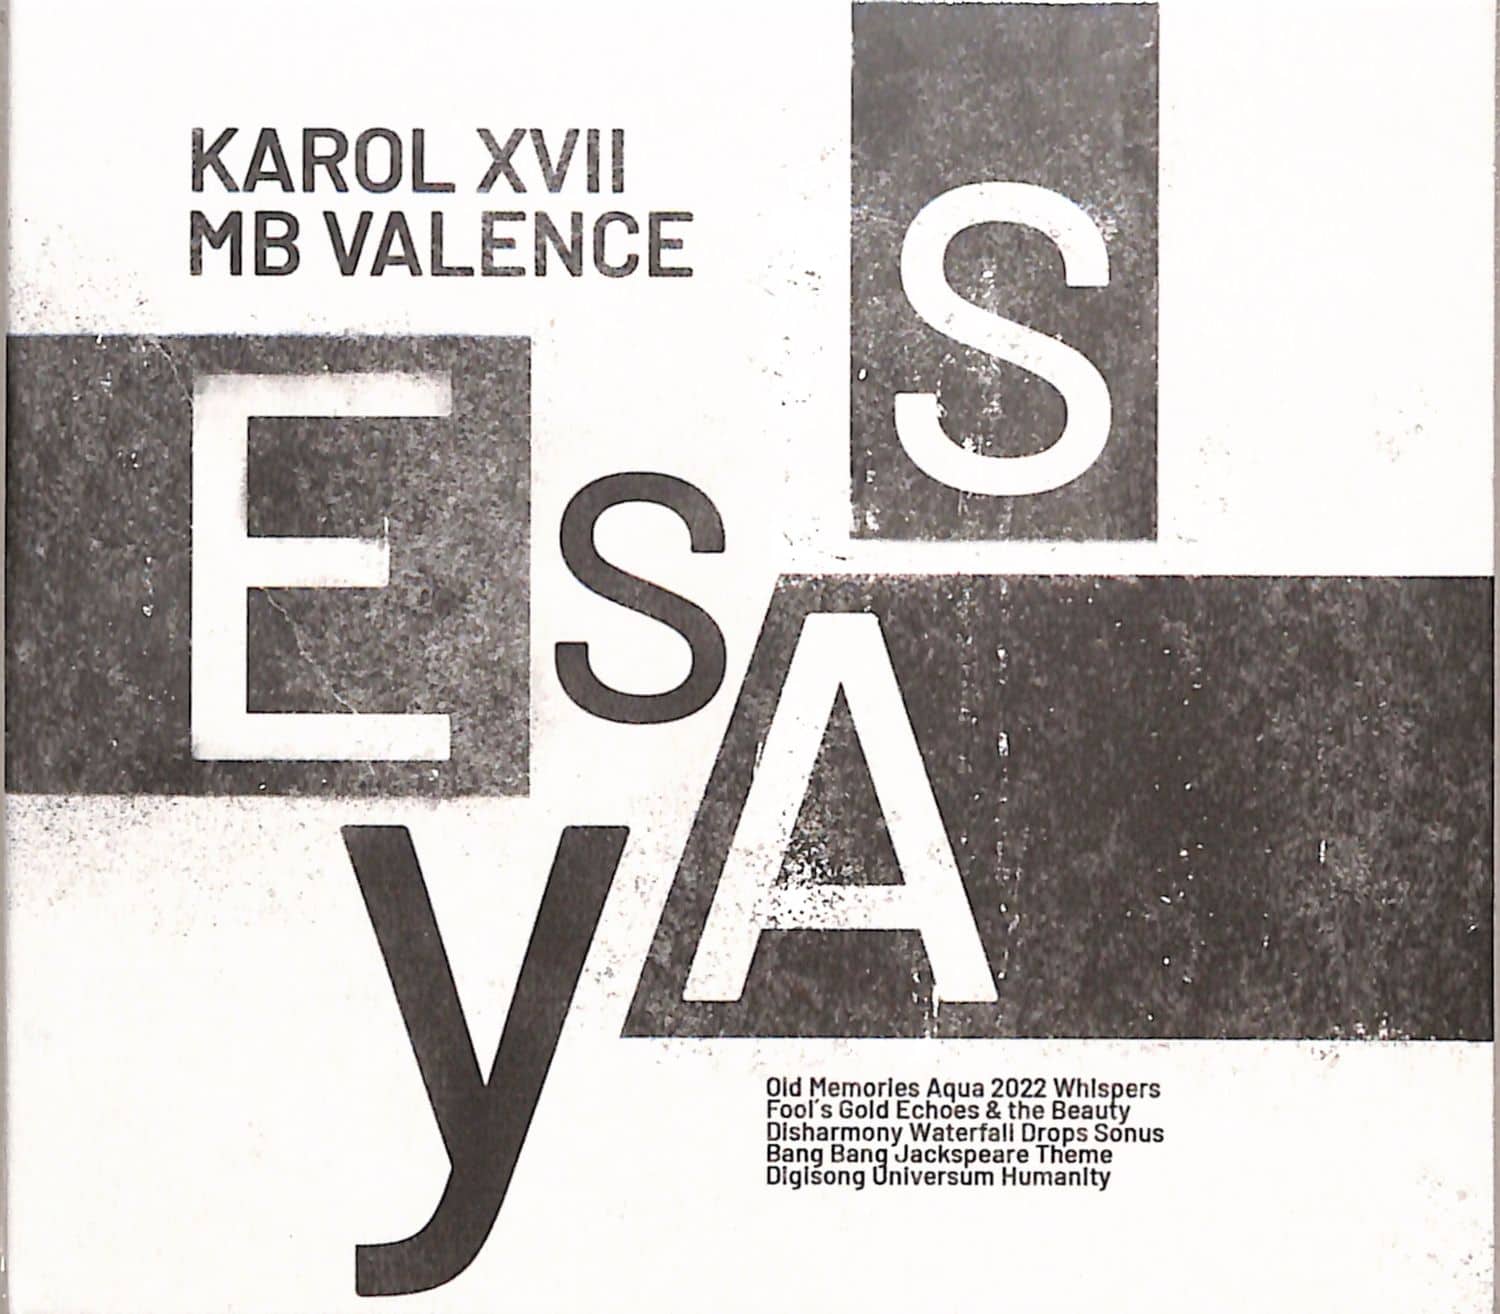 Karol XVII and MB Valence - ESSAY 